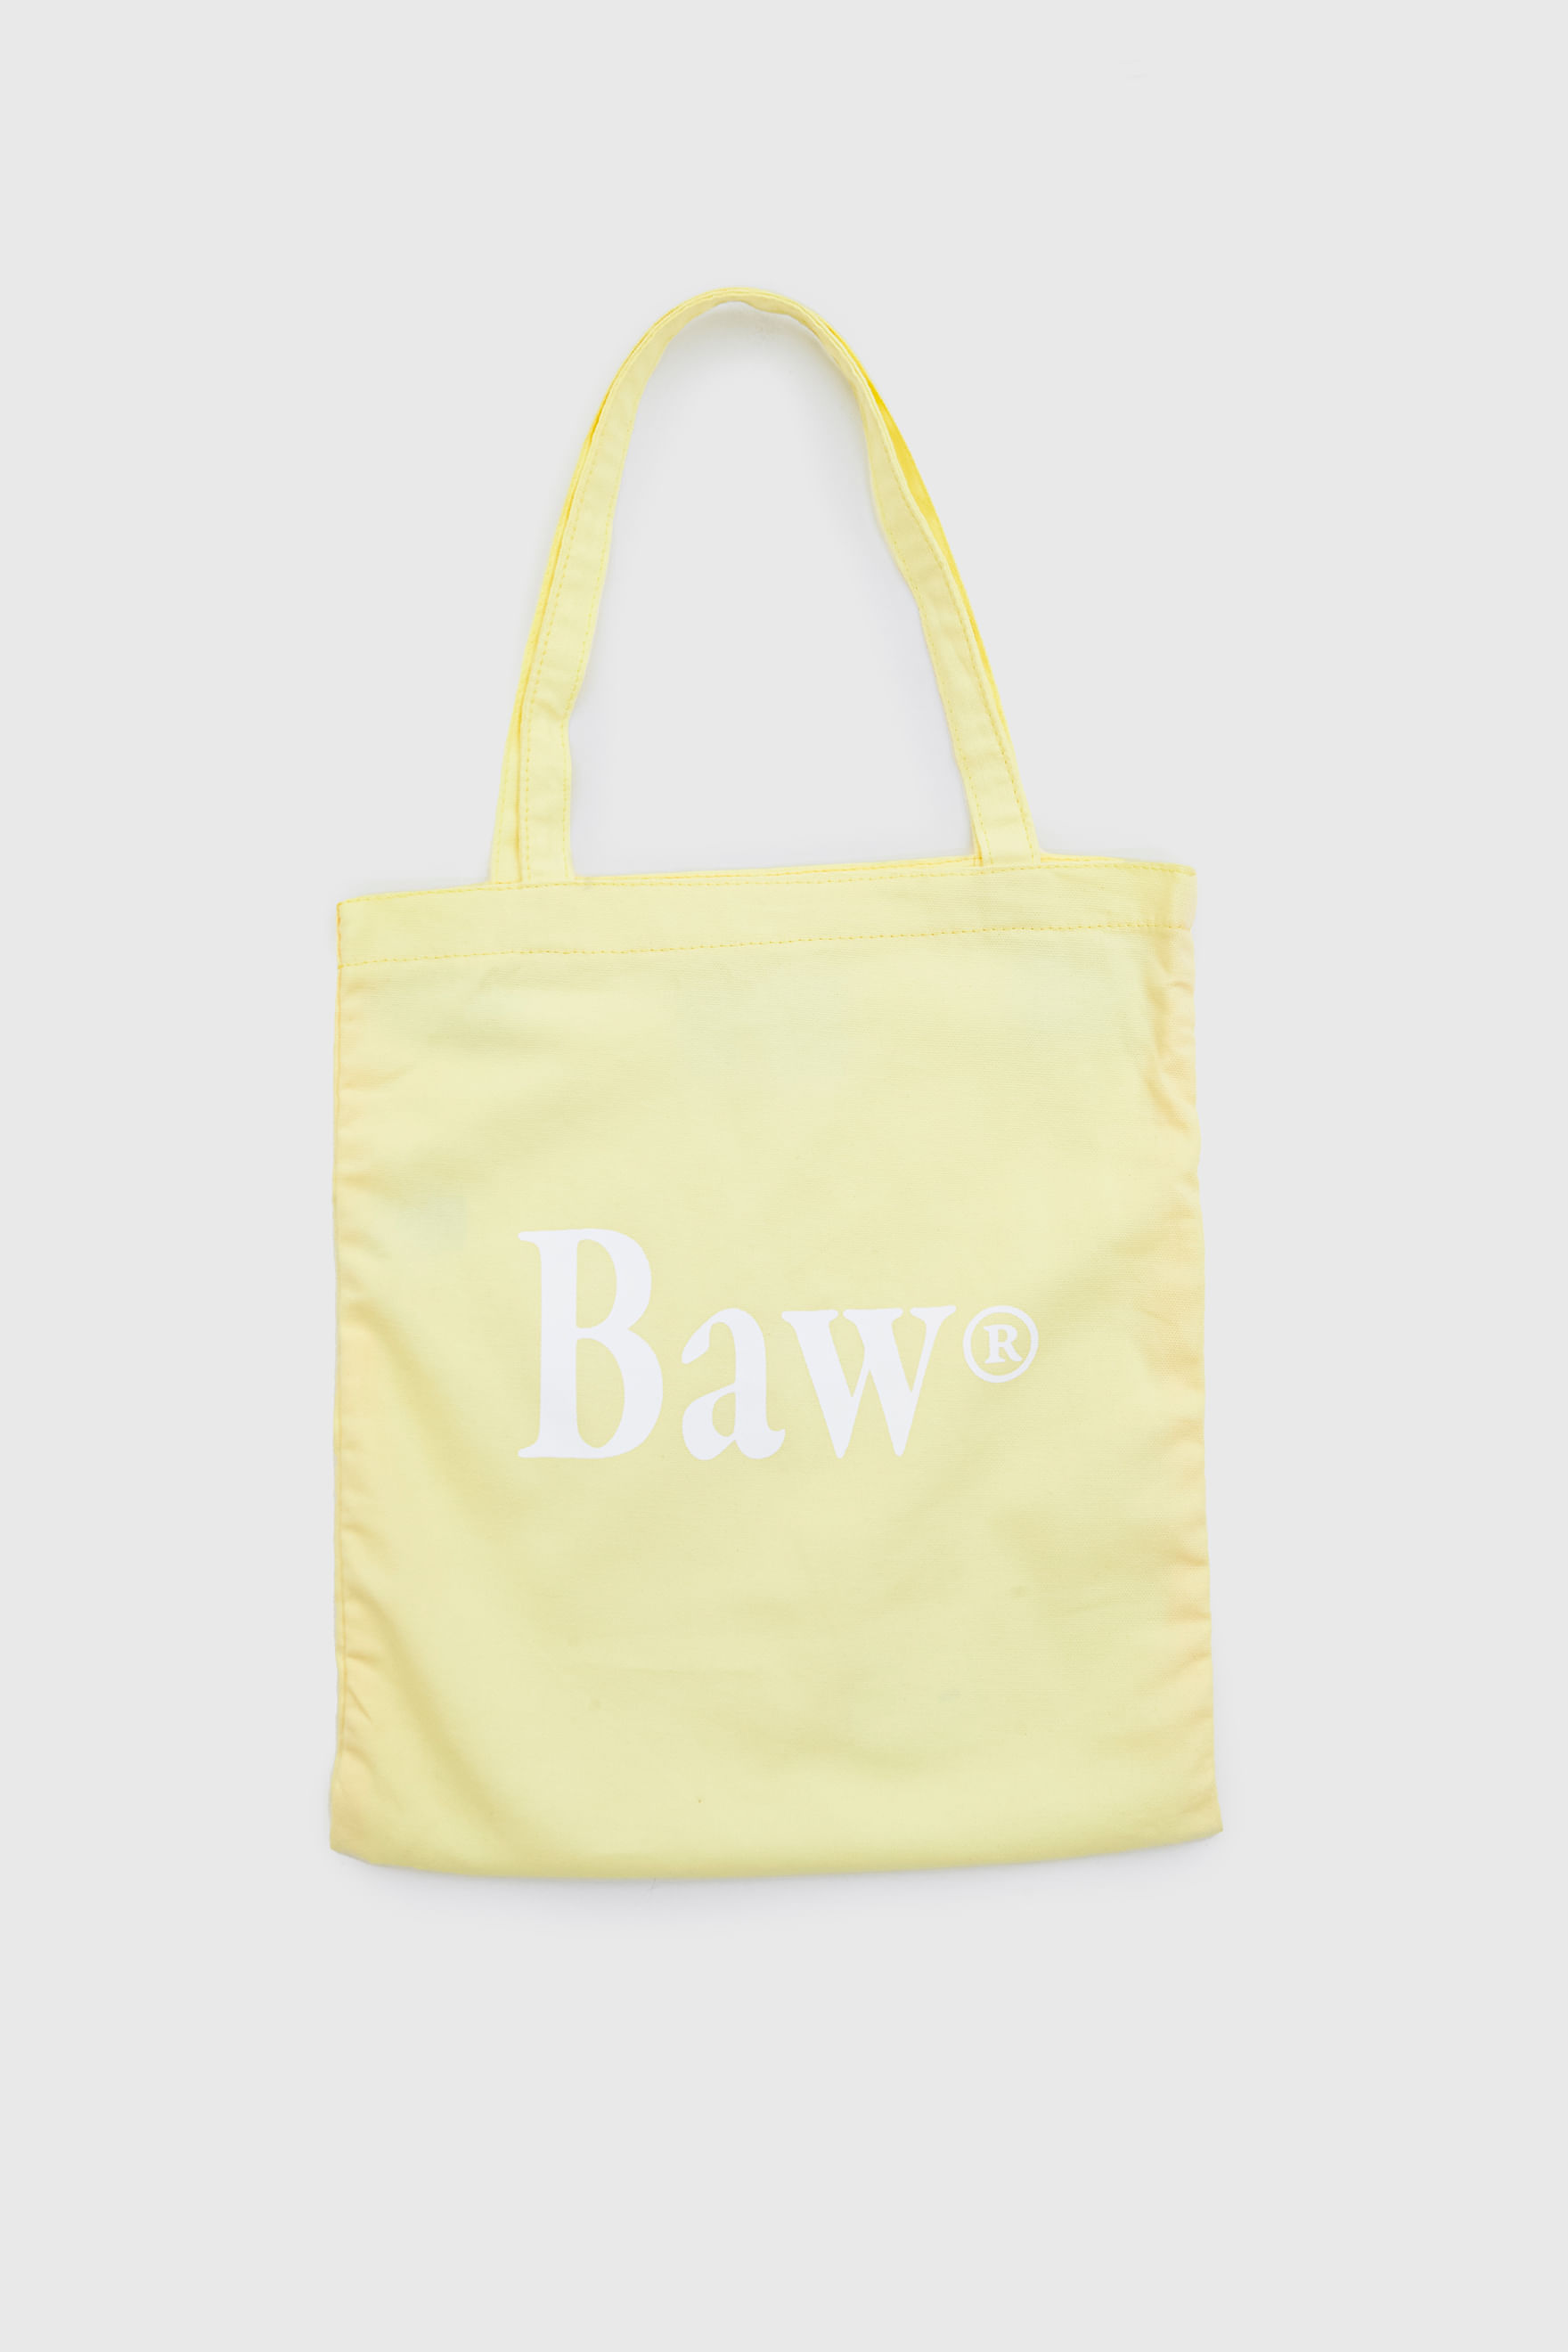 Tote Bag Baw